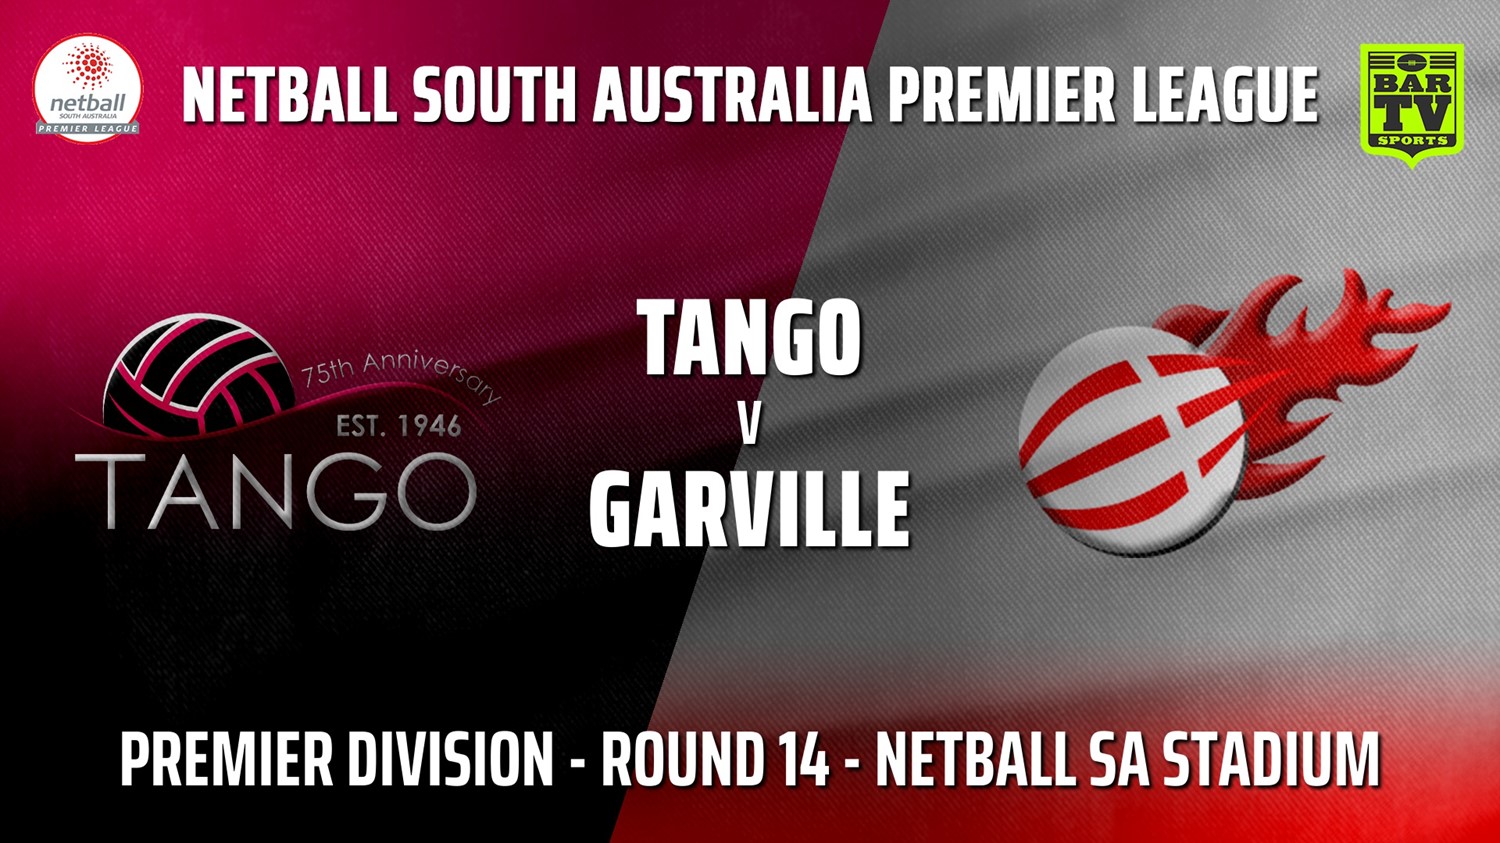 210813-SA Premier League Round 14 - Premier Division - Tango v Garville Slate Image